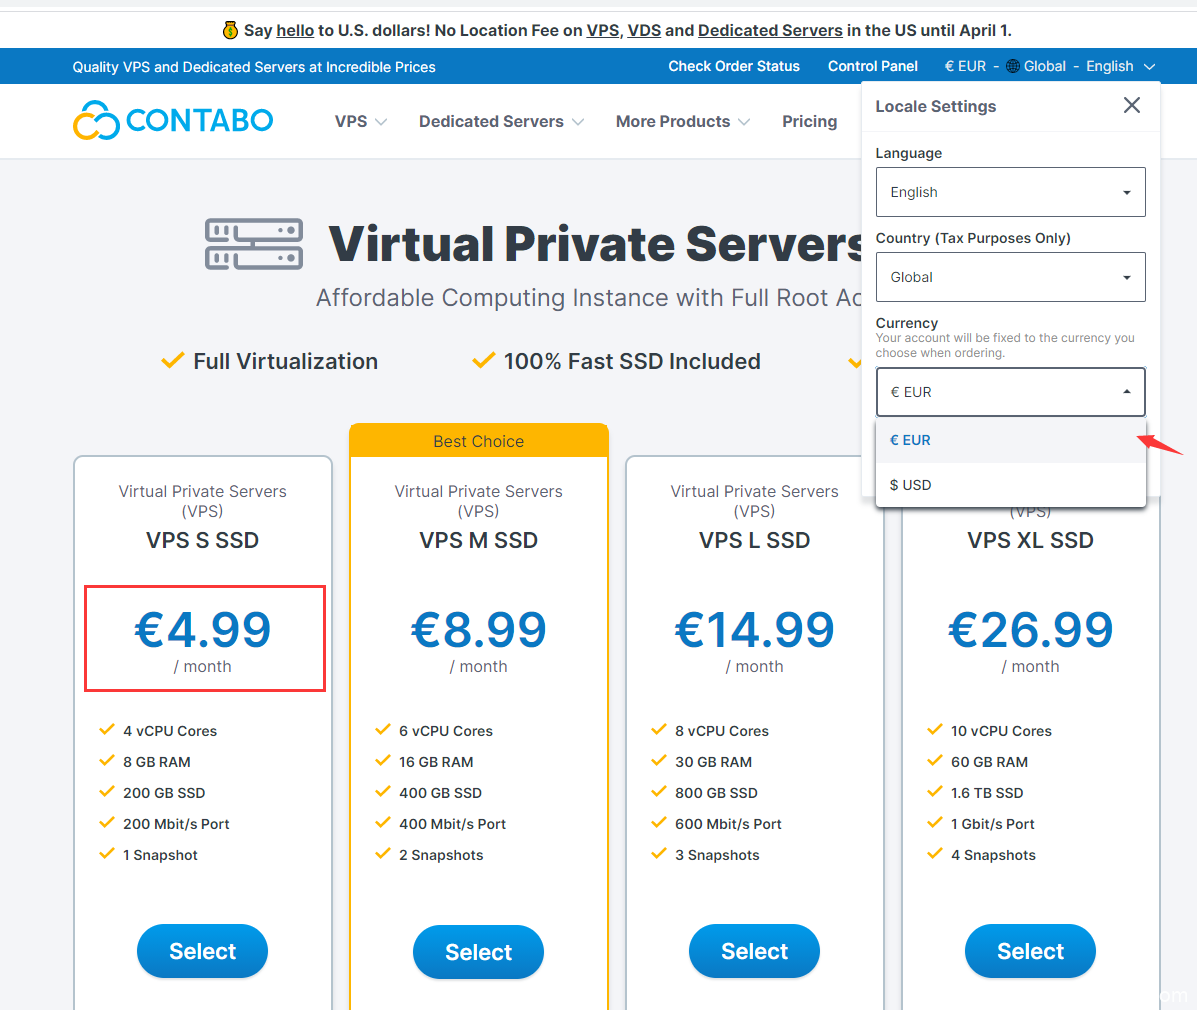 Contabo VPS云服务器付款小技巧：美元USD改成欧元EUR更优惠/4核8G/200Mbps不限流量月付约38元